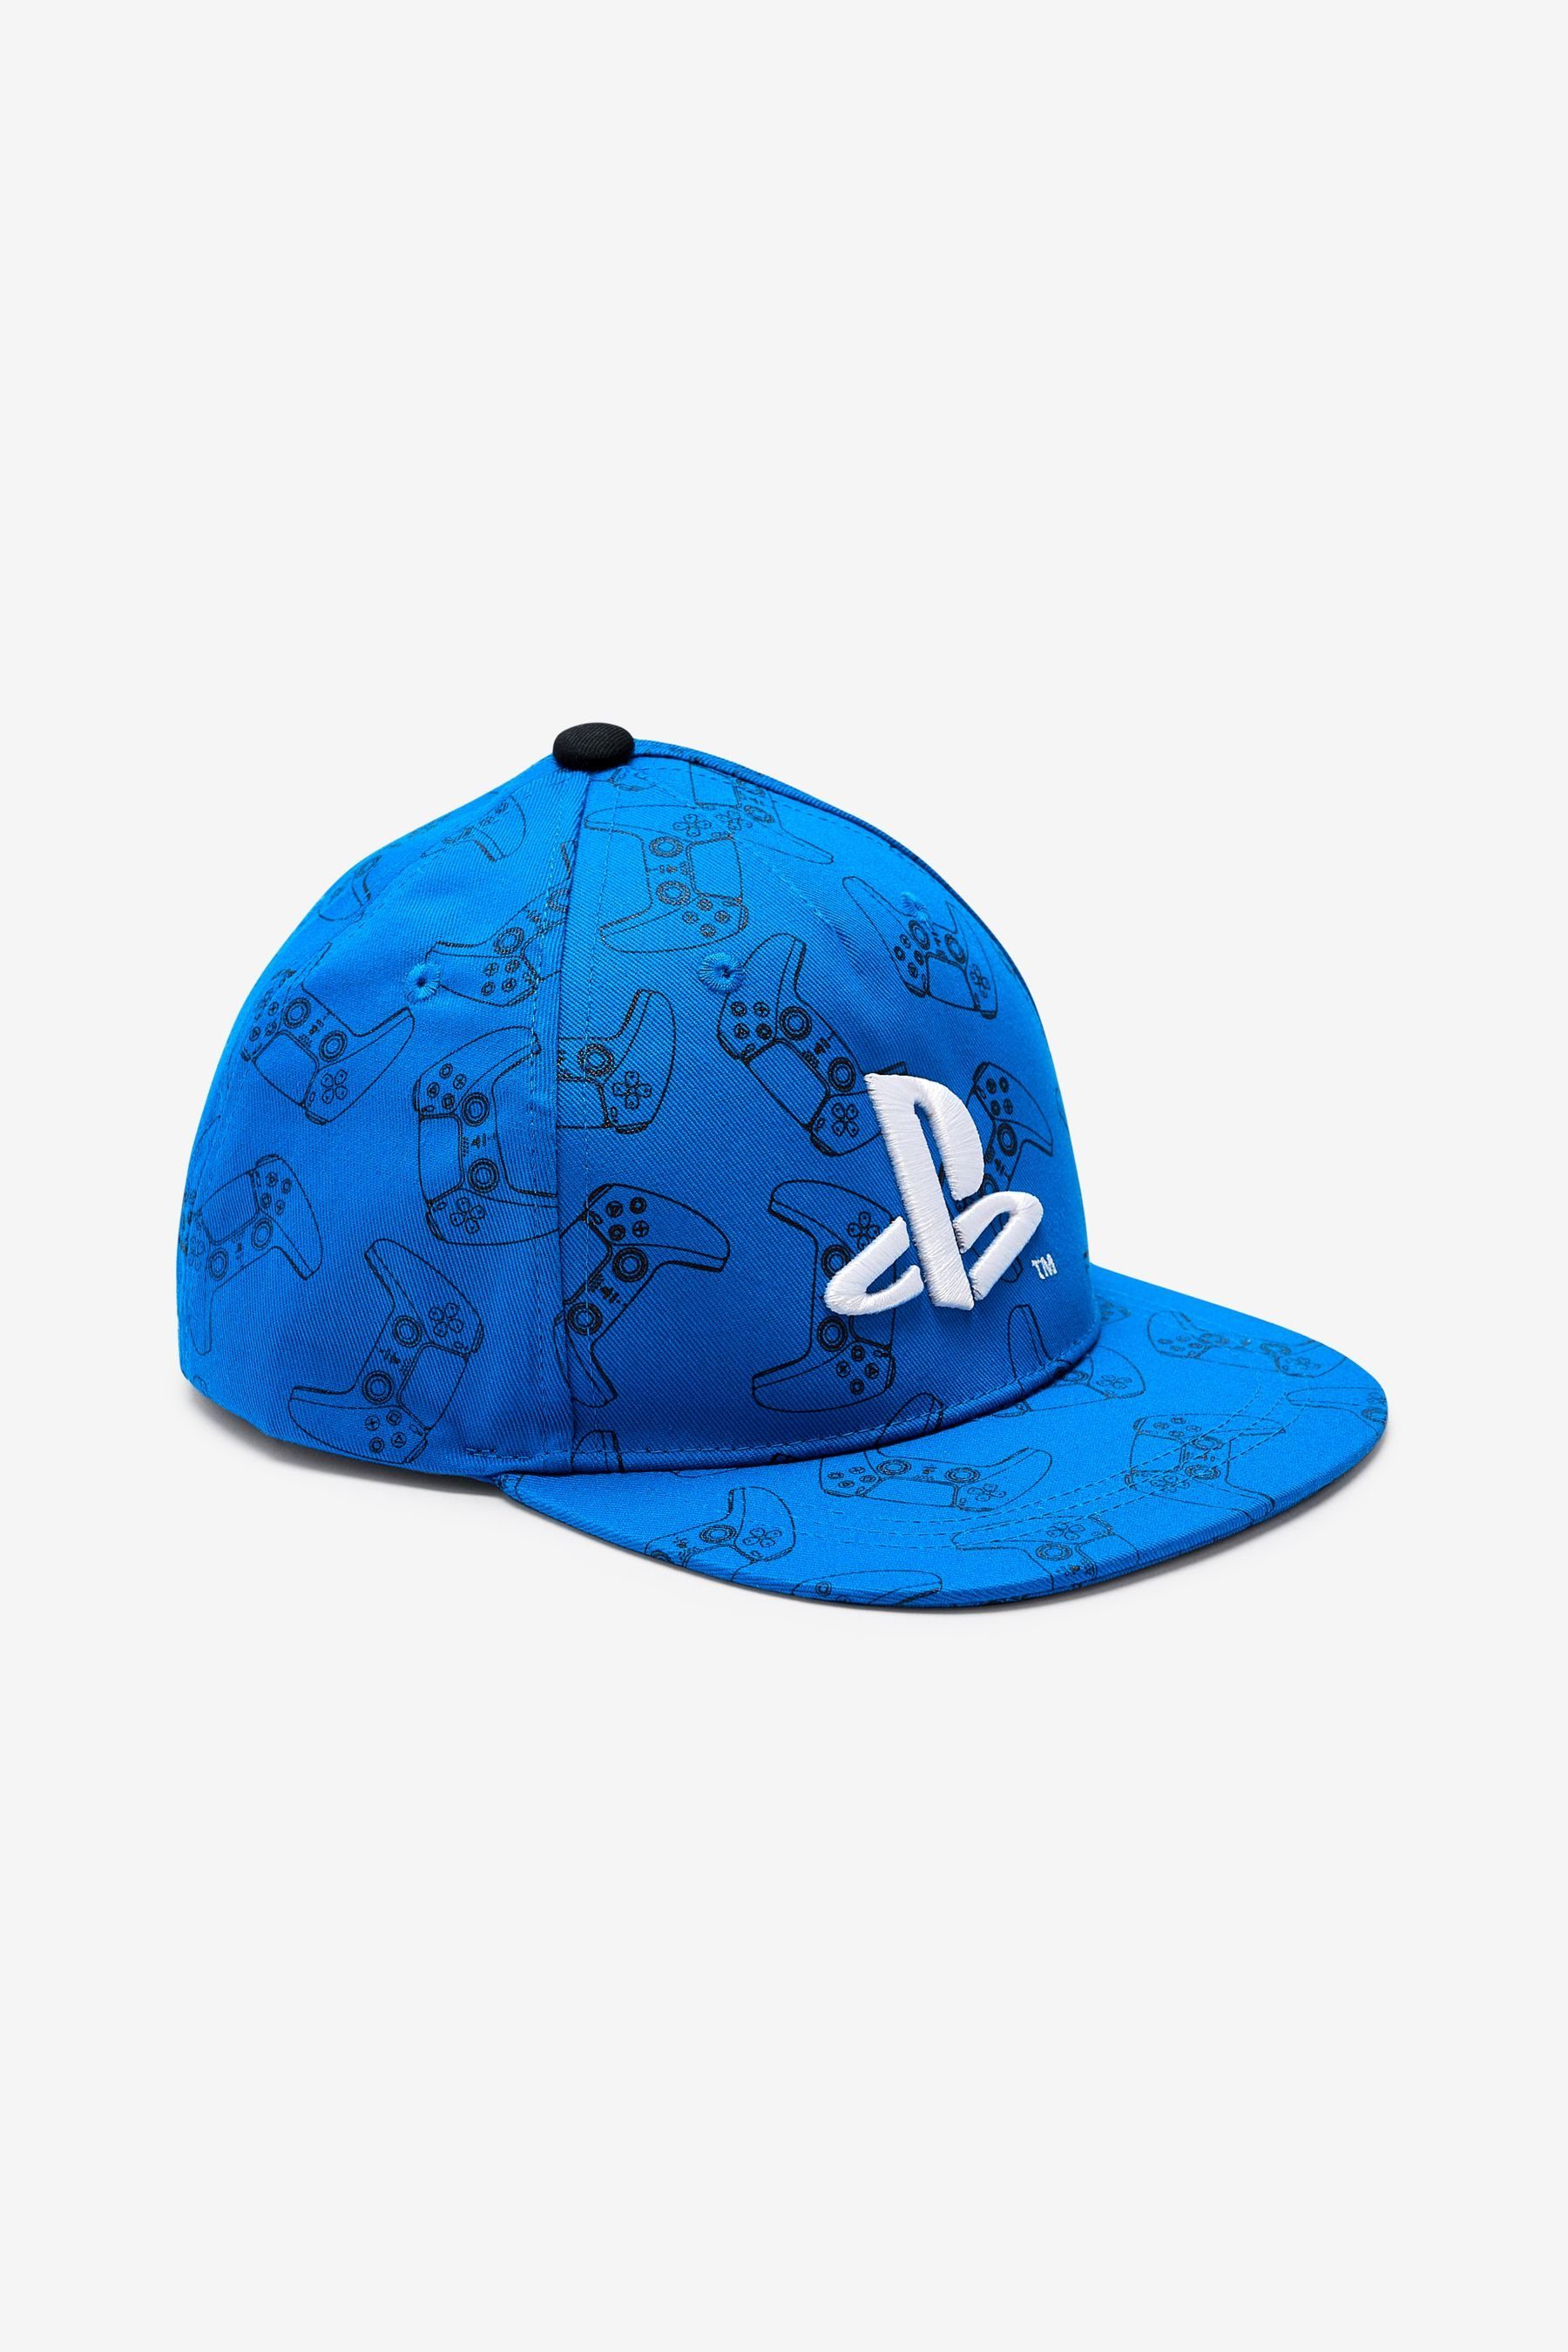 (1-St) Next Blue Offizielle Baseball Cap Baseballkappe PlayStation